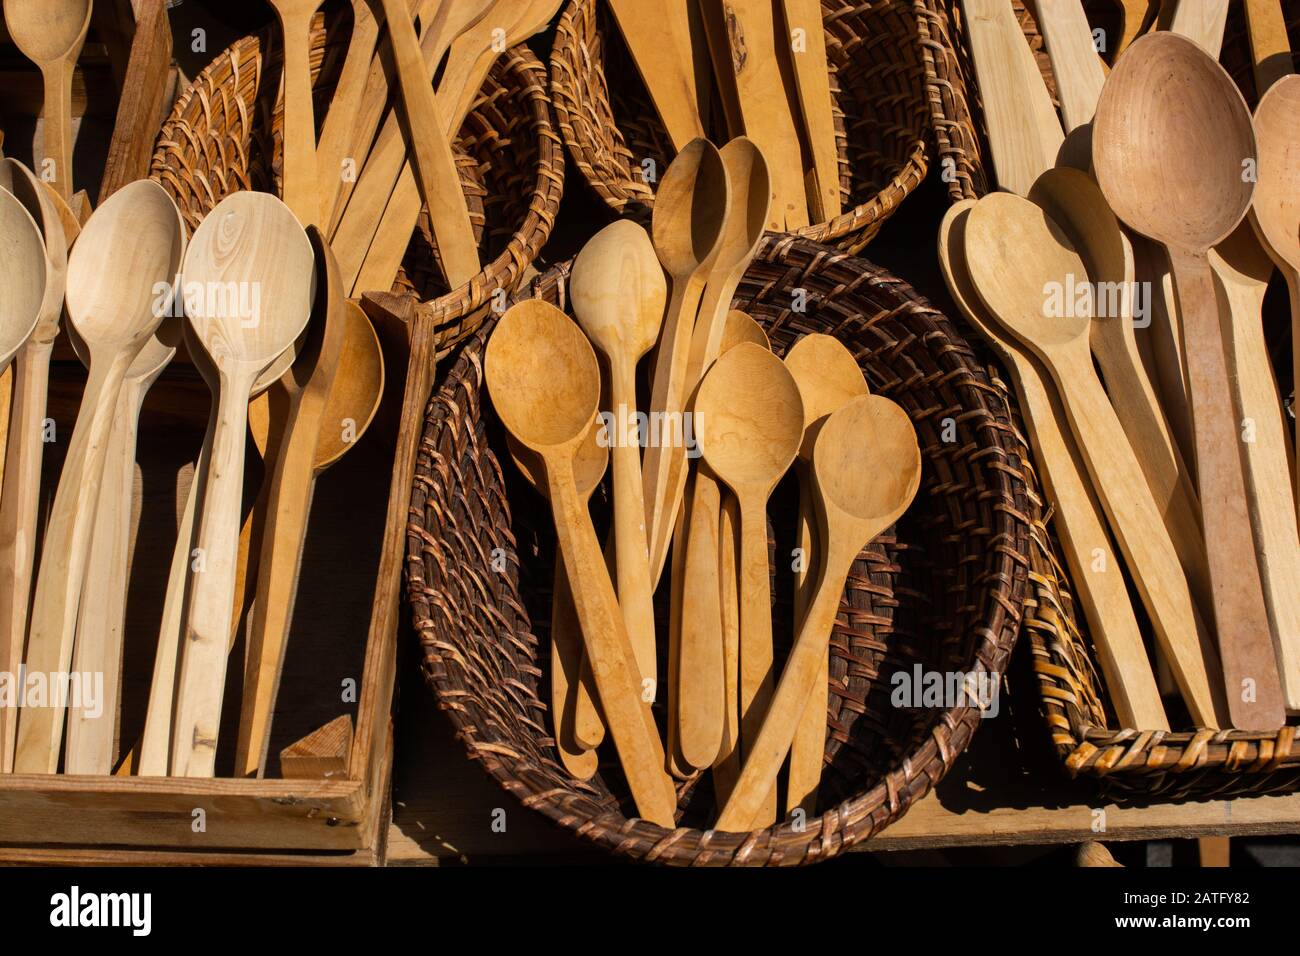 Handmade Wooden Kitchen Utensils Spoons Wooden Kitchen Items Stock Photo Alamy